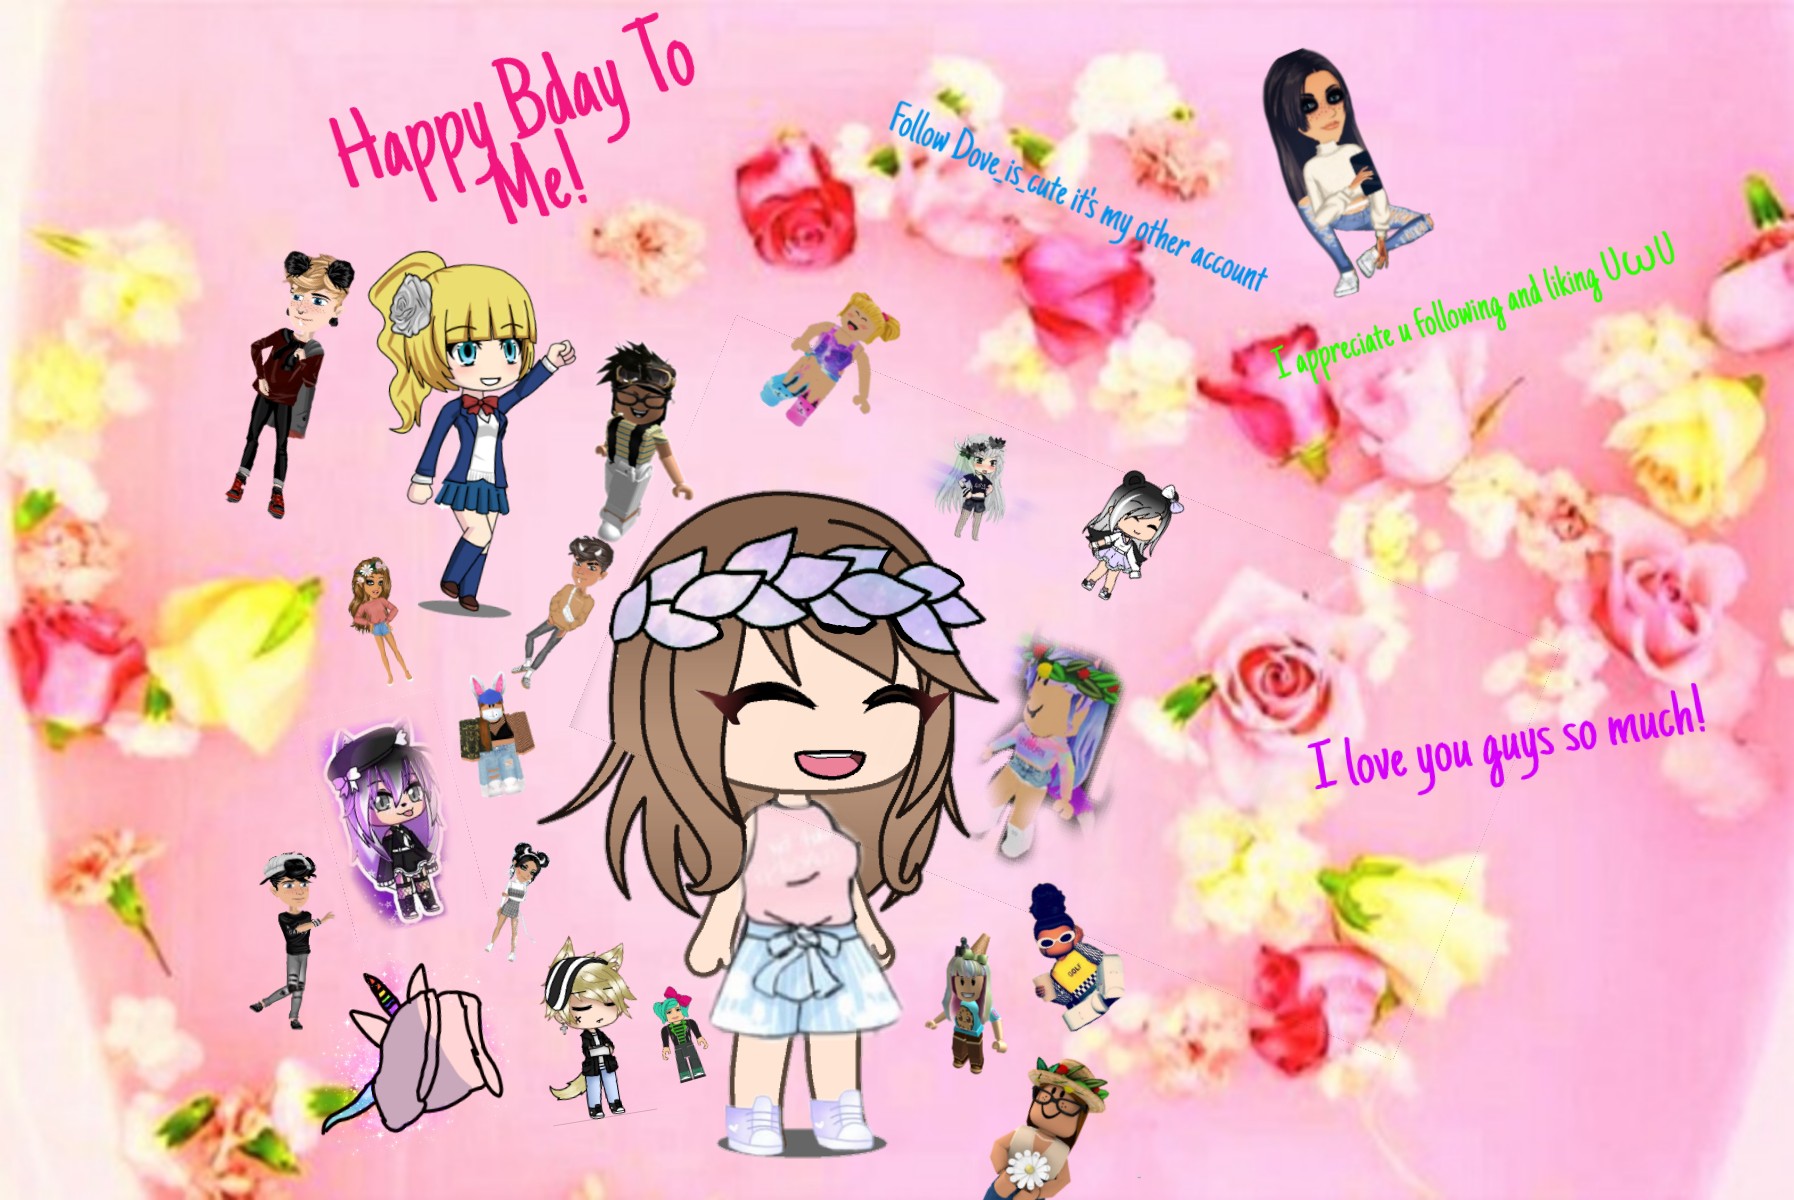 Birthday Gacha Msp Roblox Happybday Bday Happybday Happ - roblox girl edit image by gacha and roblox